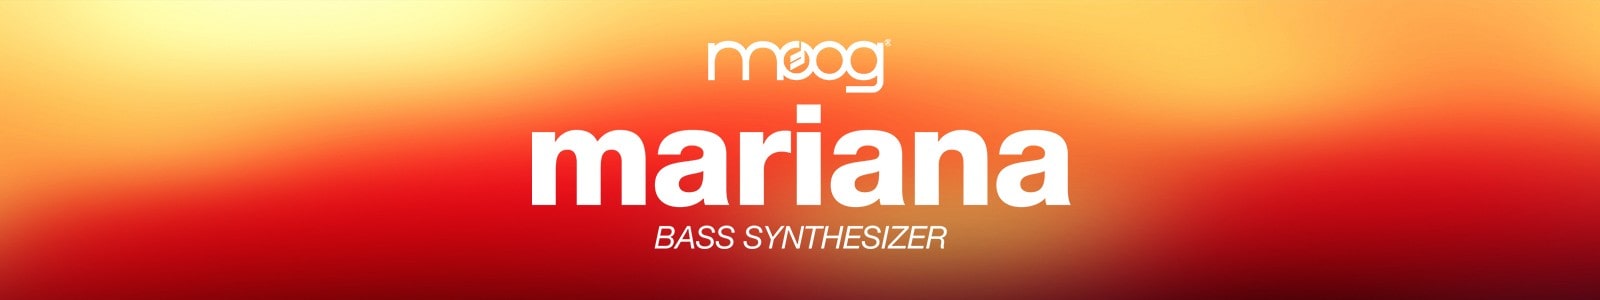 Moog Mariana Bass Synth